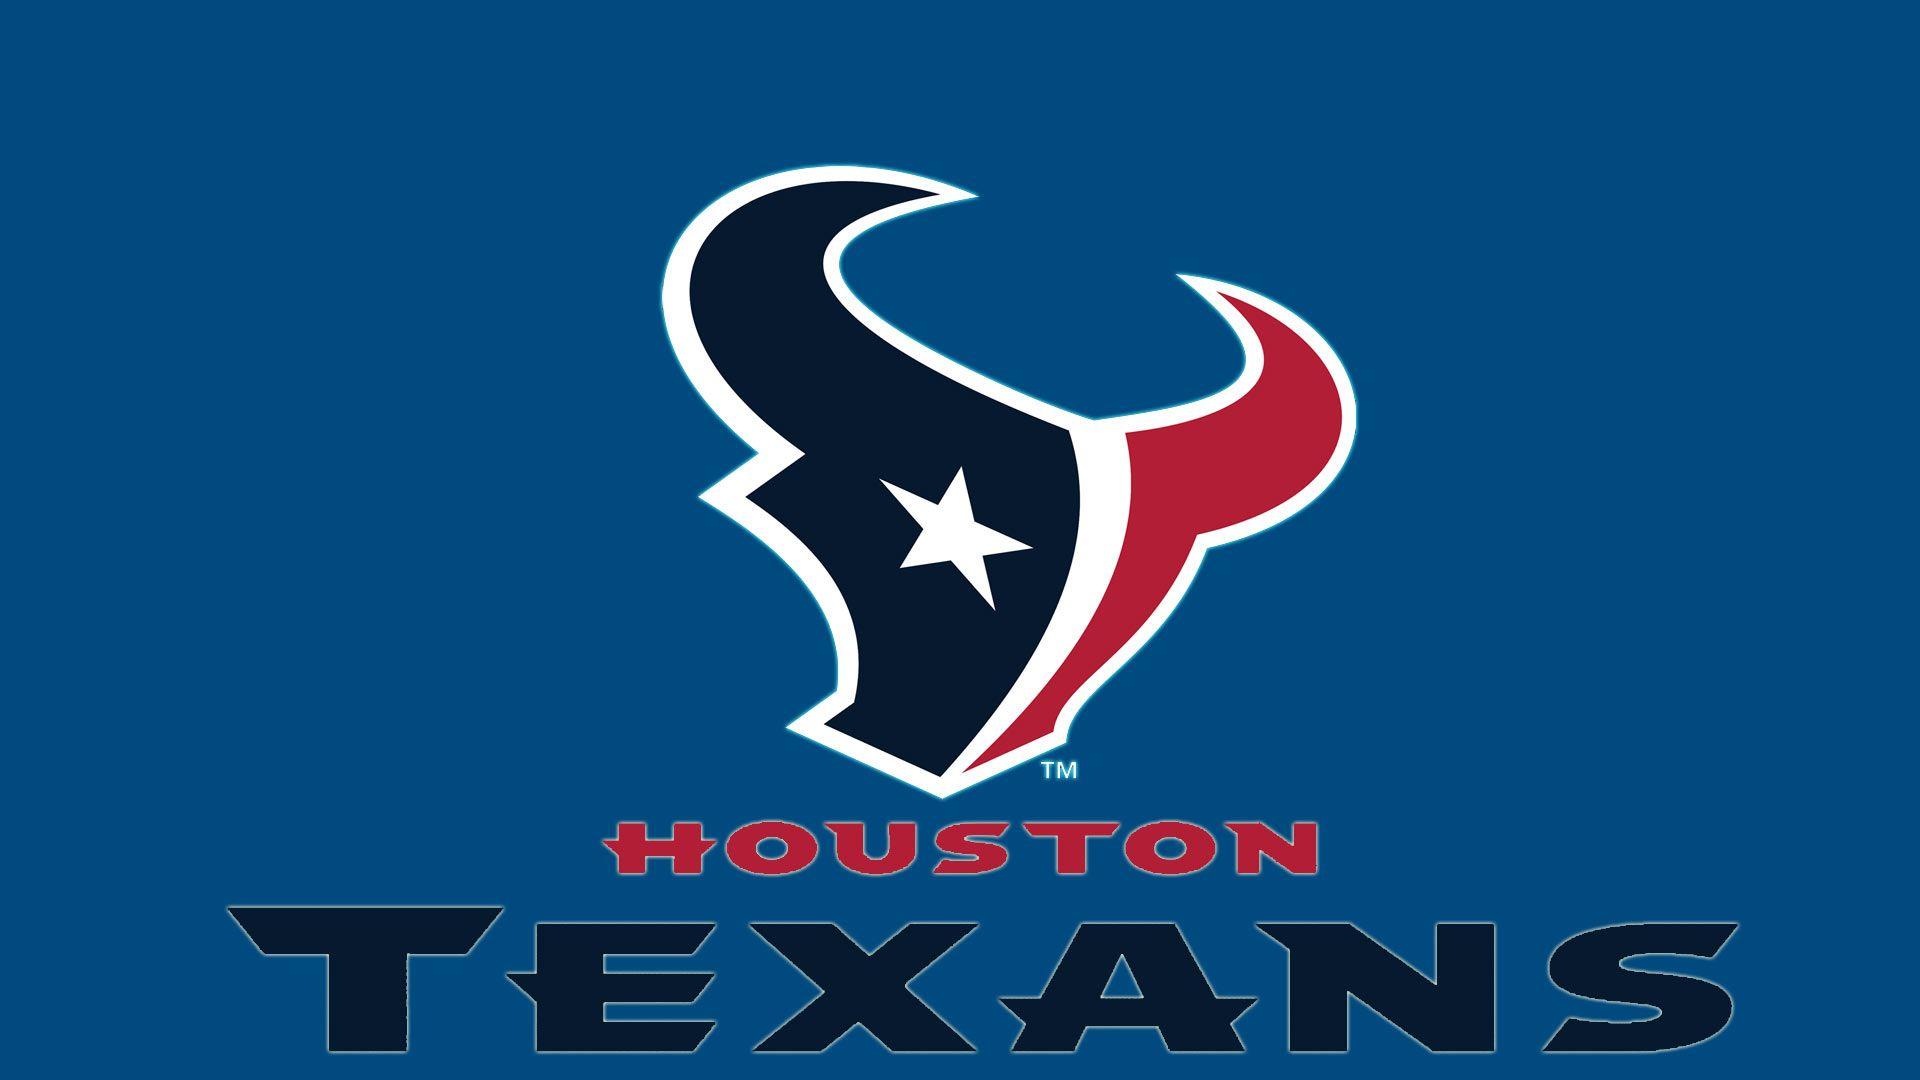 Houston Texans logo Hd 1080p Wallpapers screen size 1920X1080